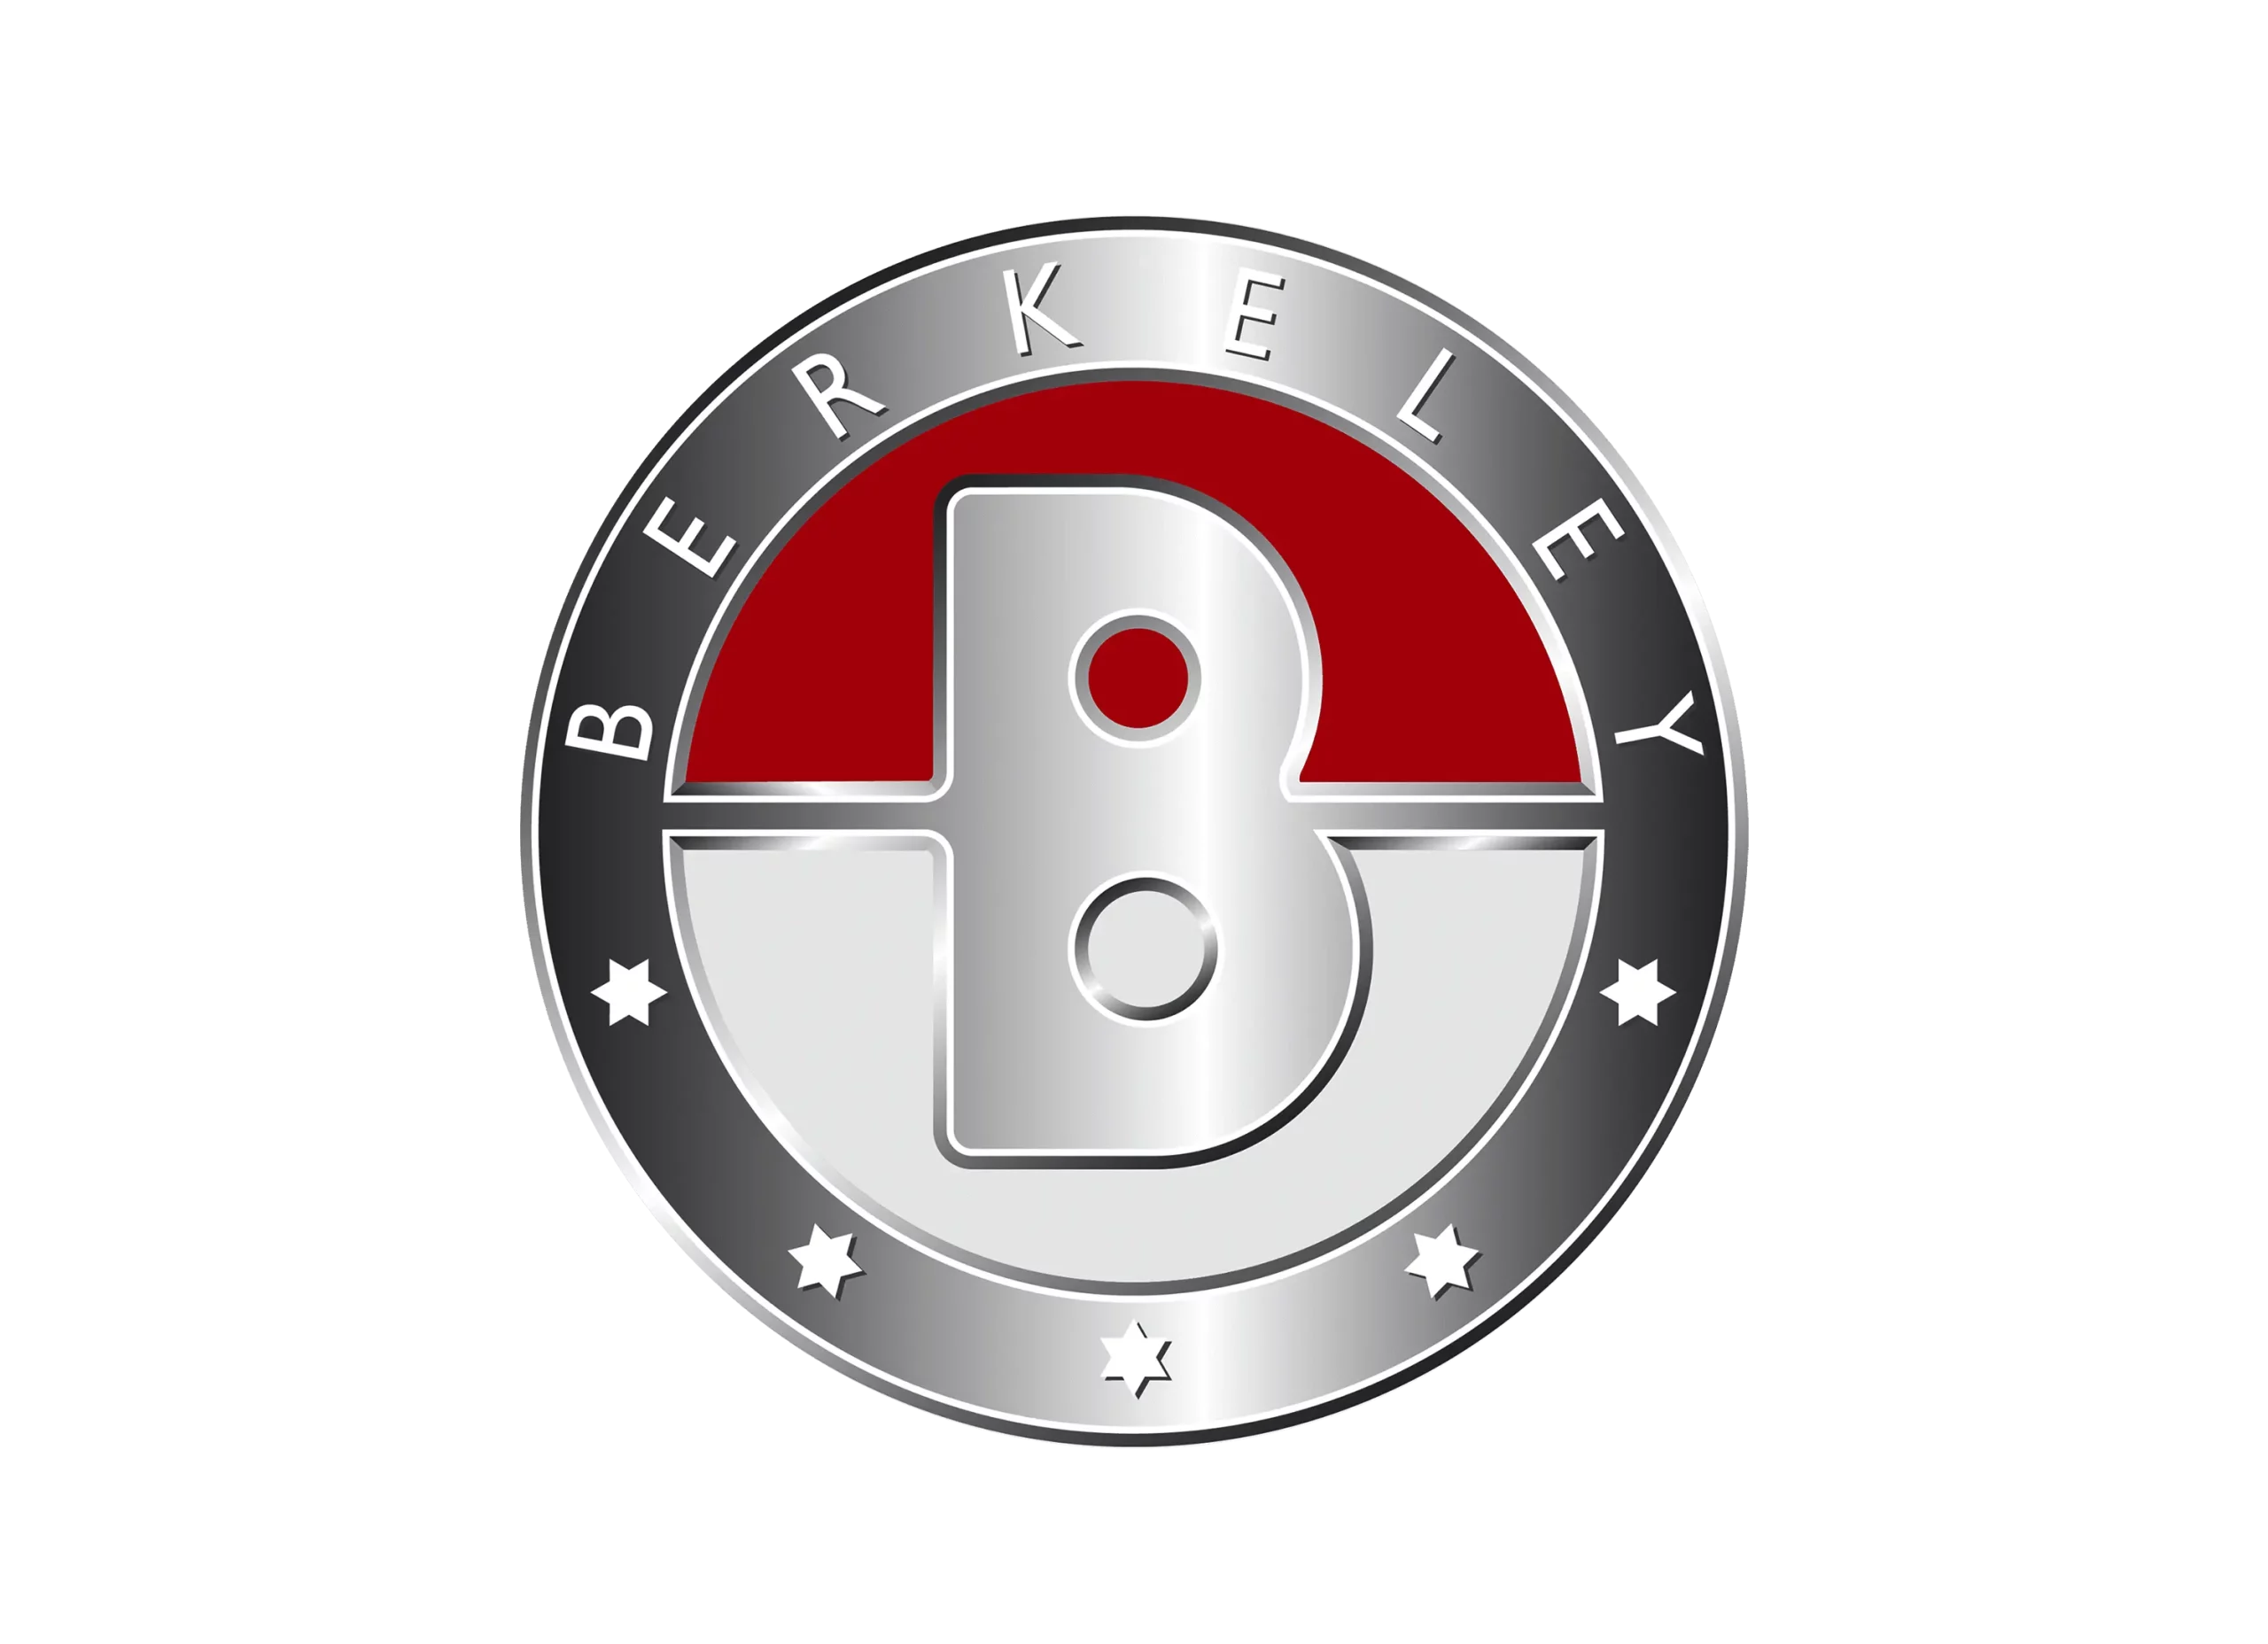 Berkeley logo 2020 -present